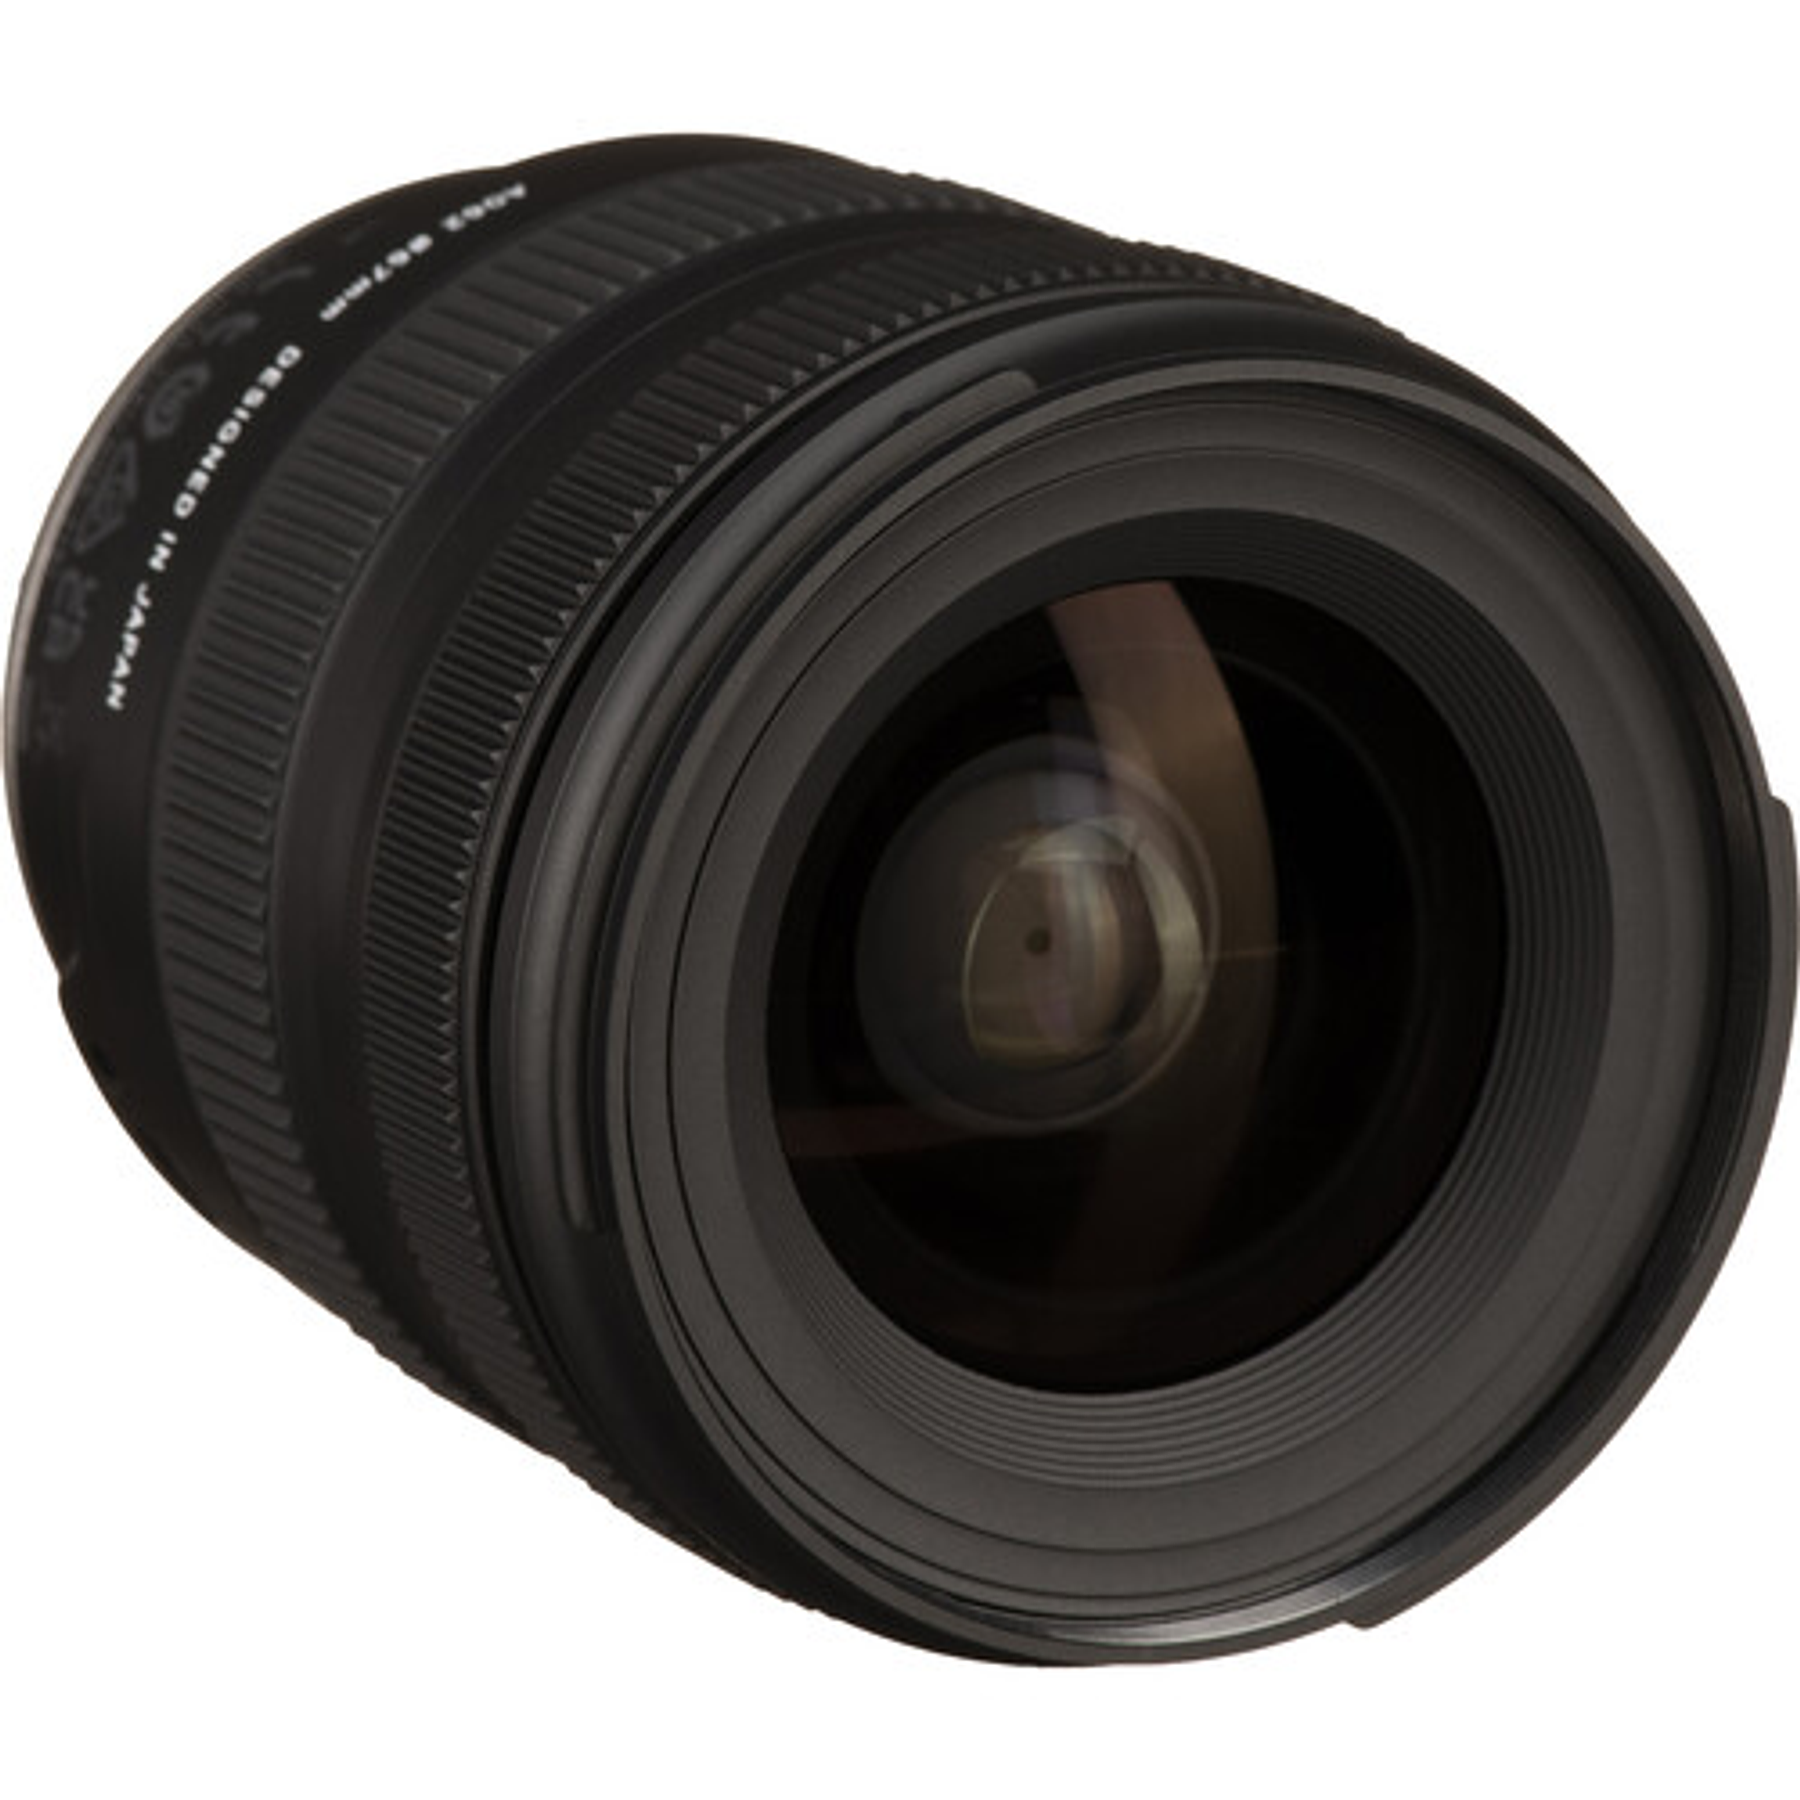 Tamron 20-40mm f/2.8 Di III VXD para Sony E